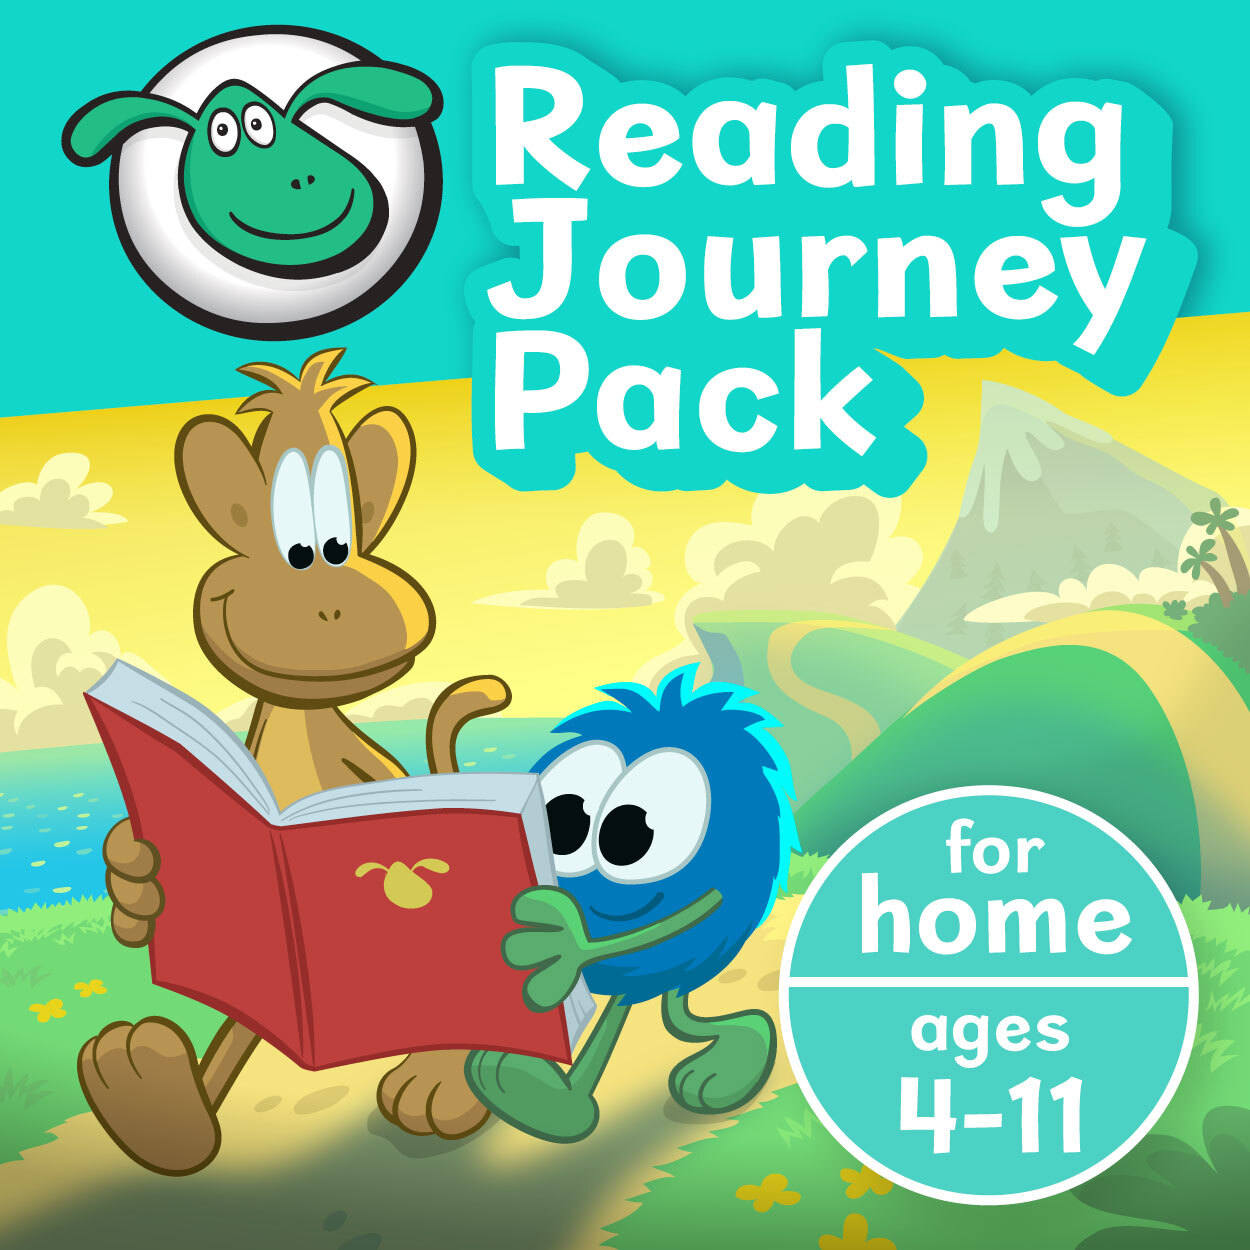 Reading Journey Pack